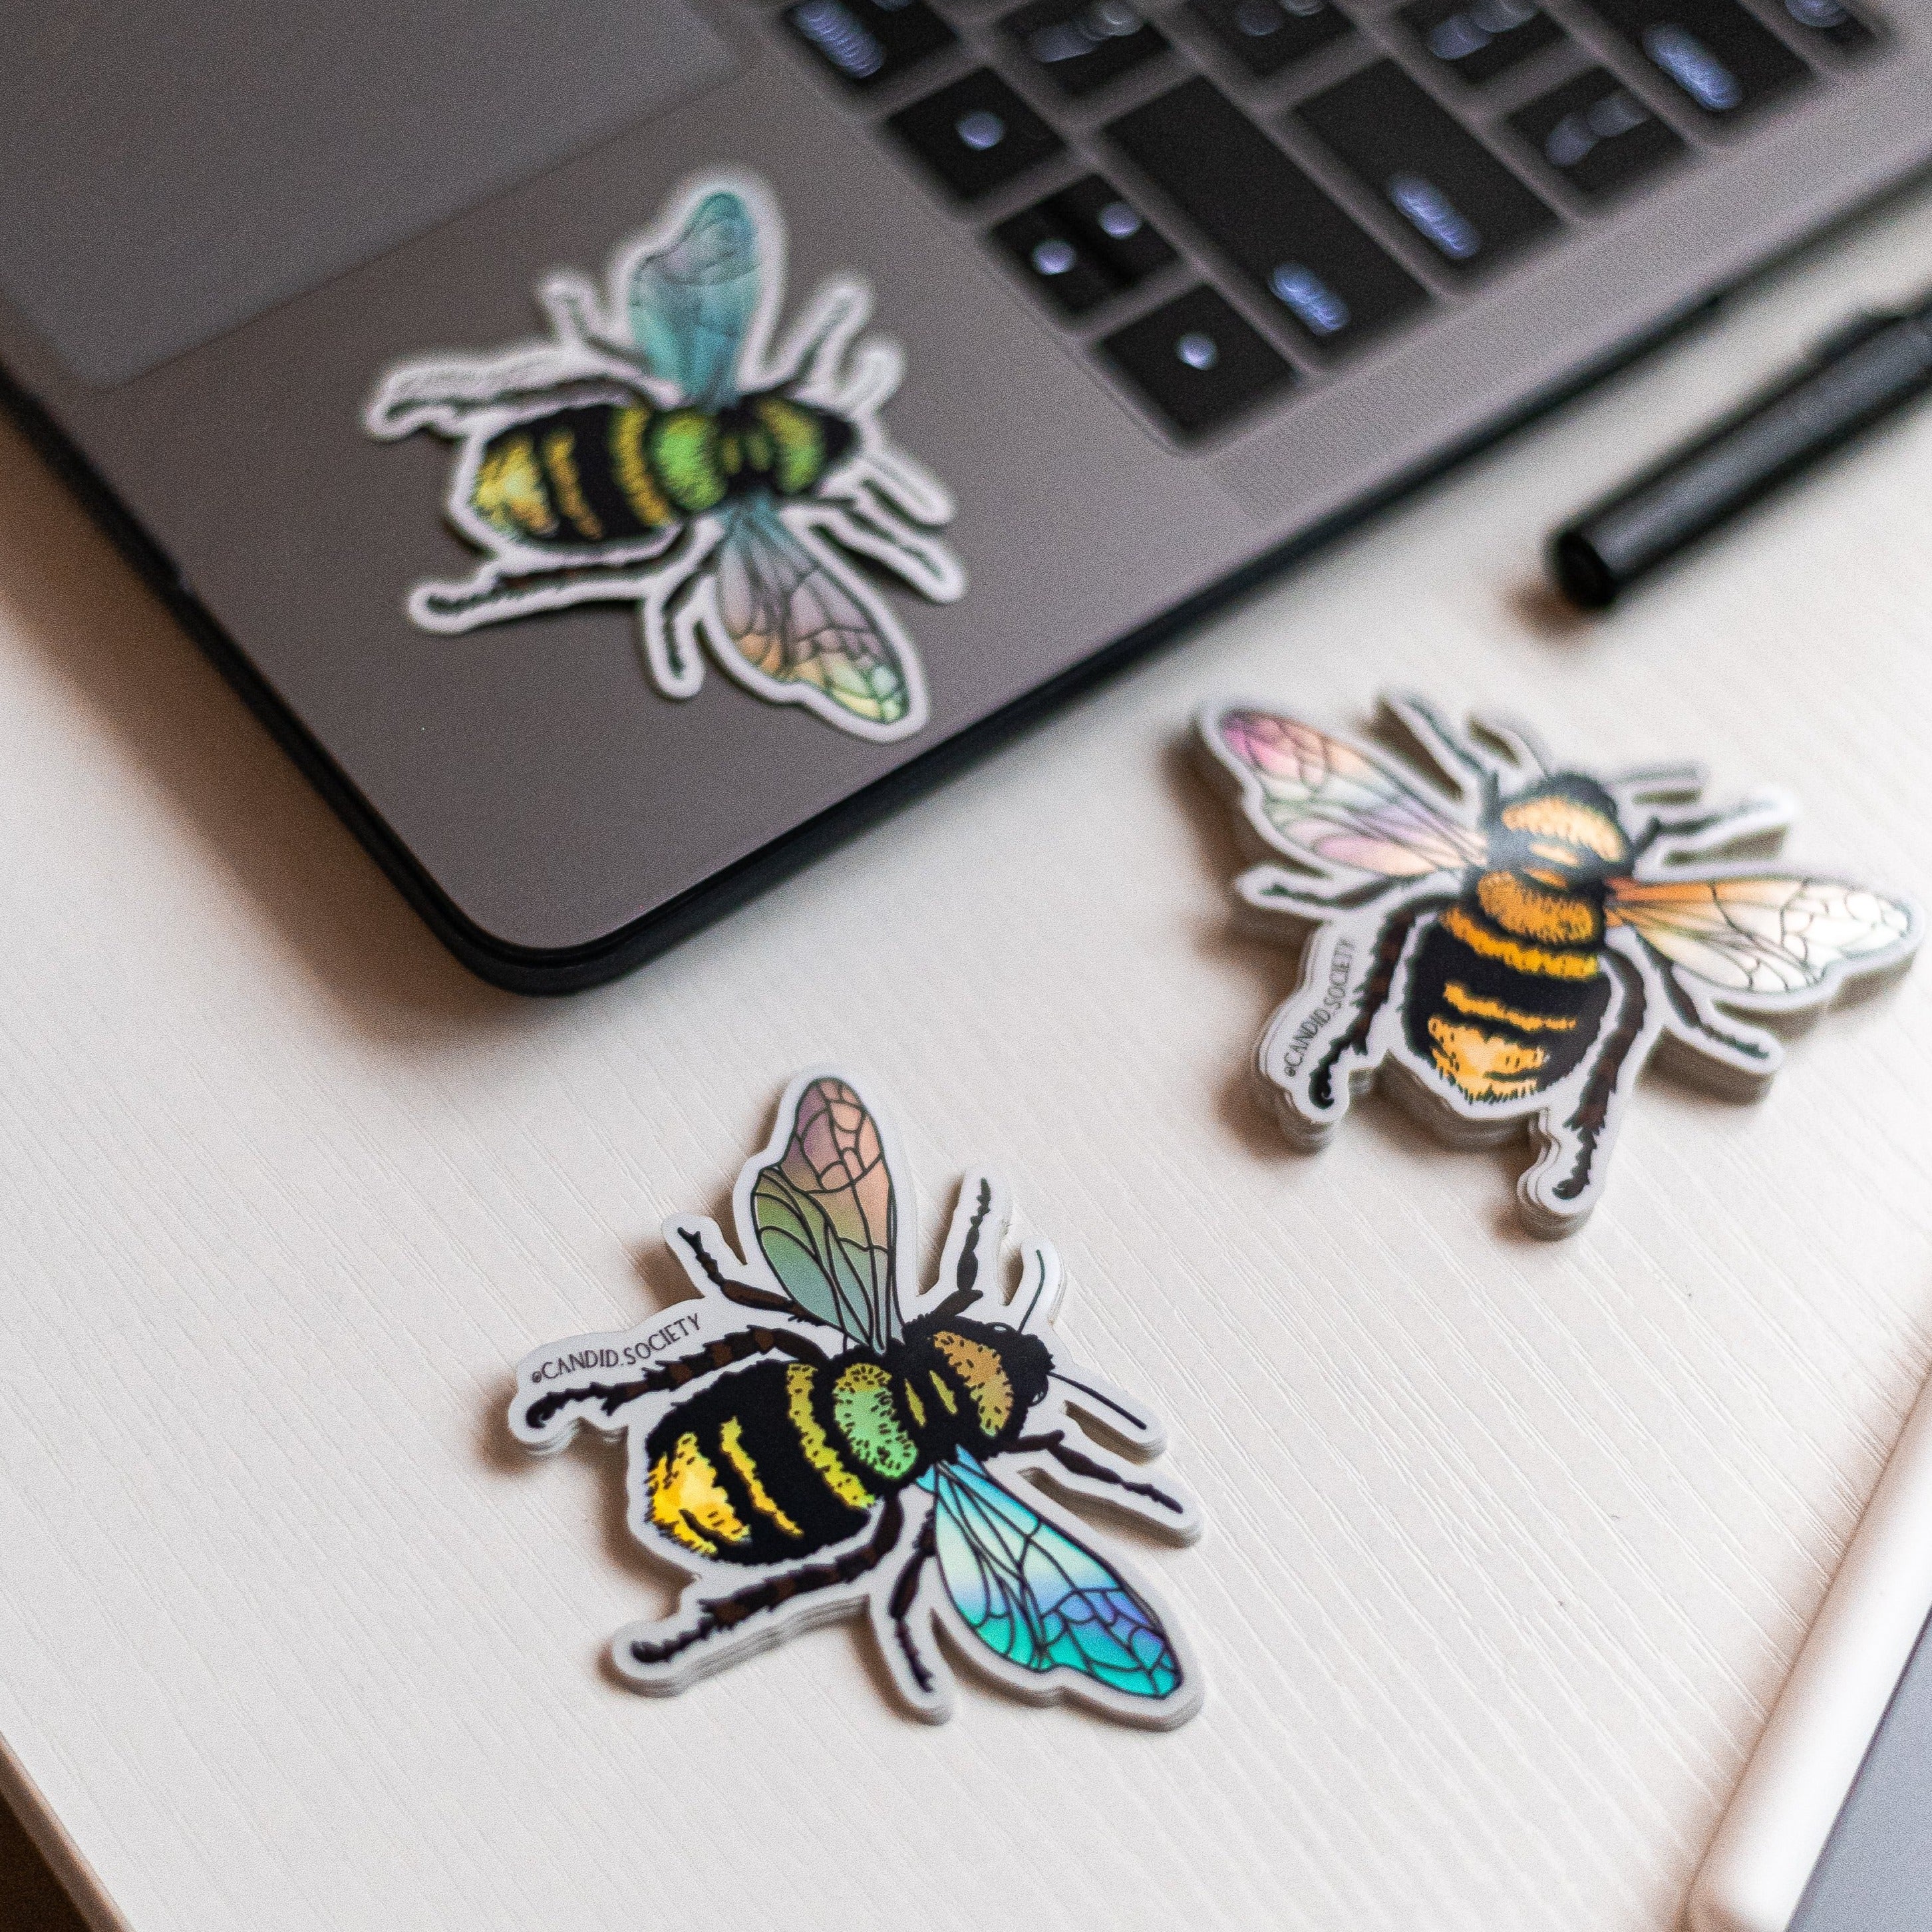 14 - Abeja (Bee) - Premium Sticker